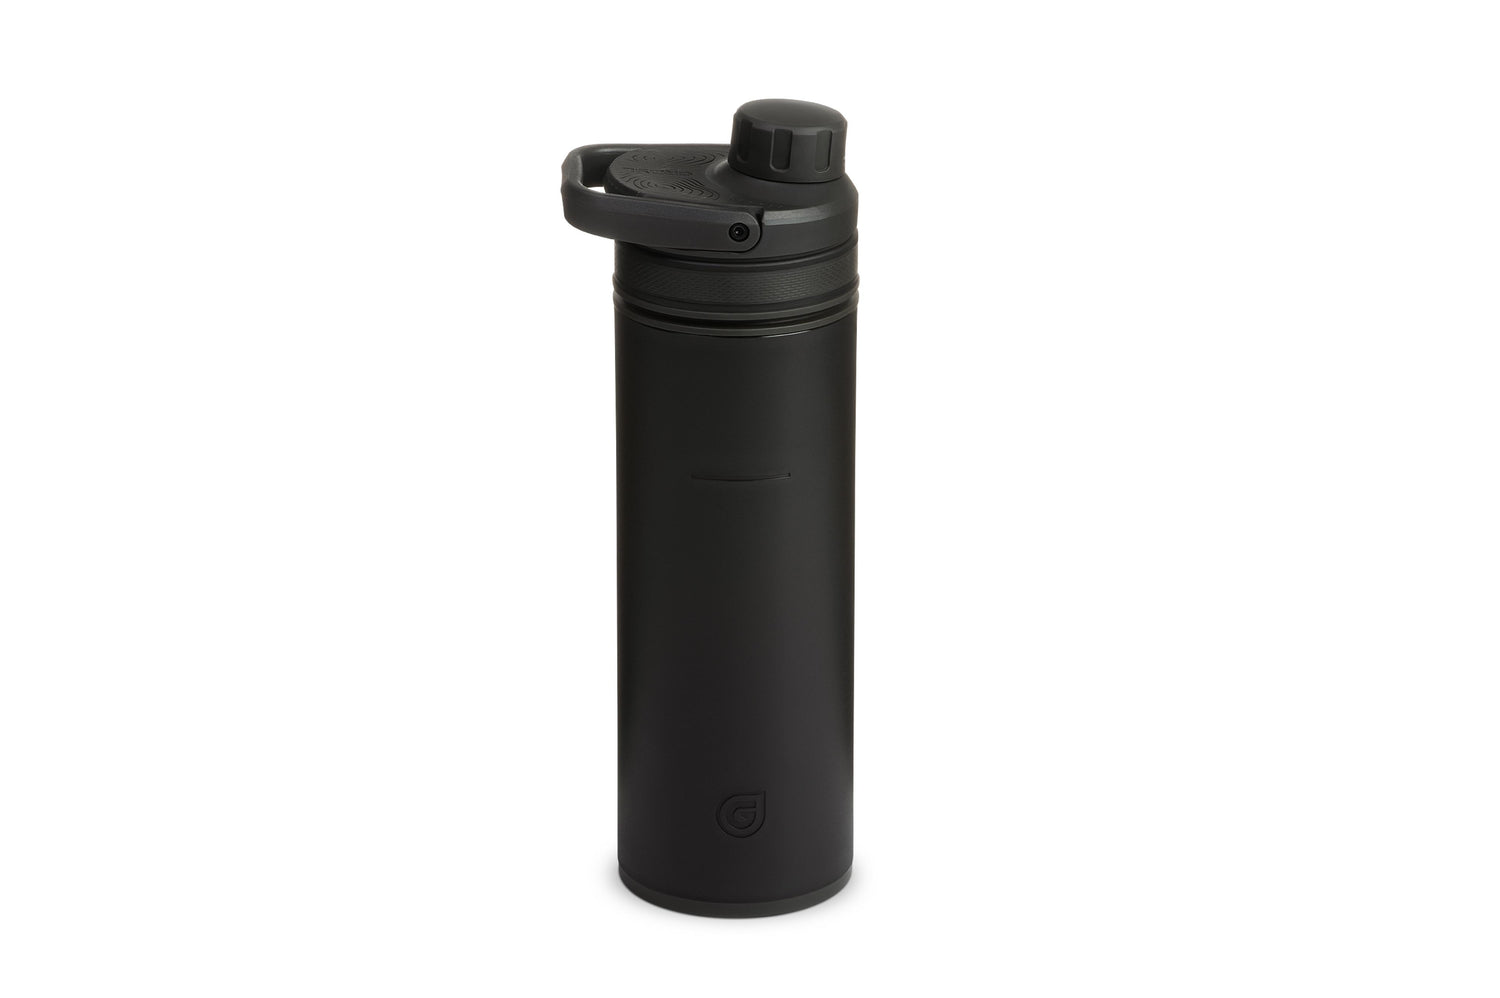 Grayl Ultrapress Purifier Bottle - Covert Black